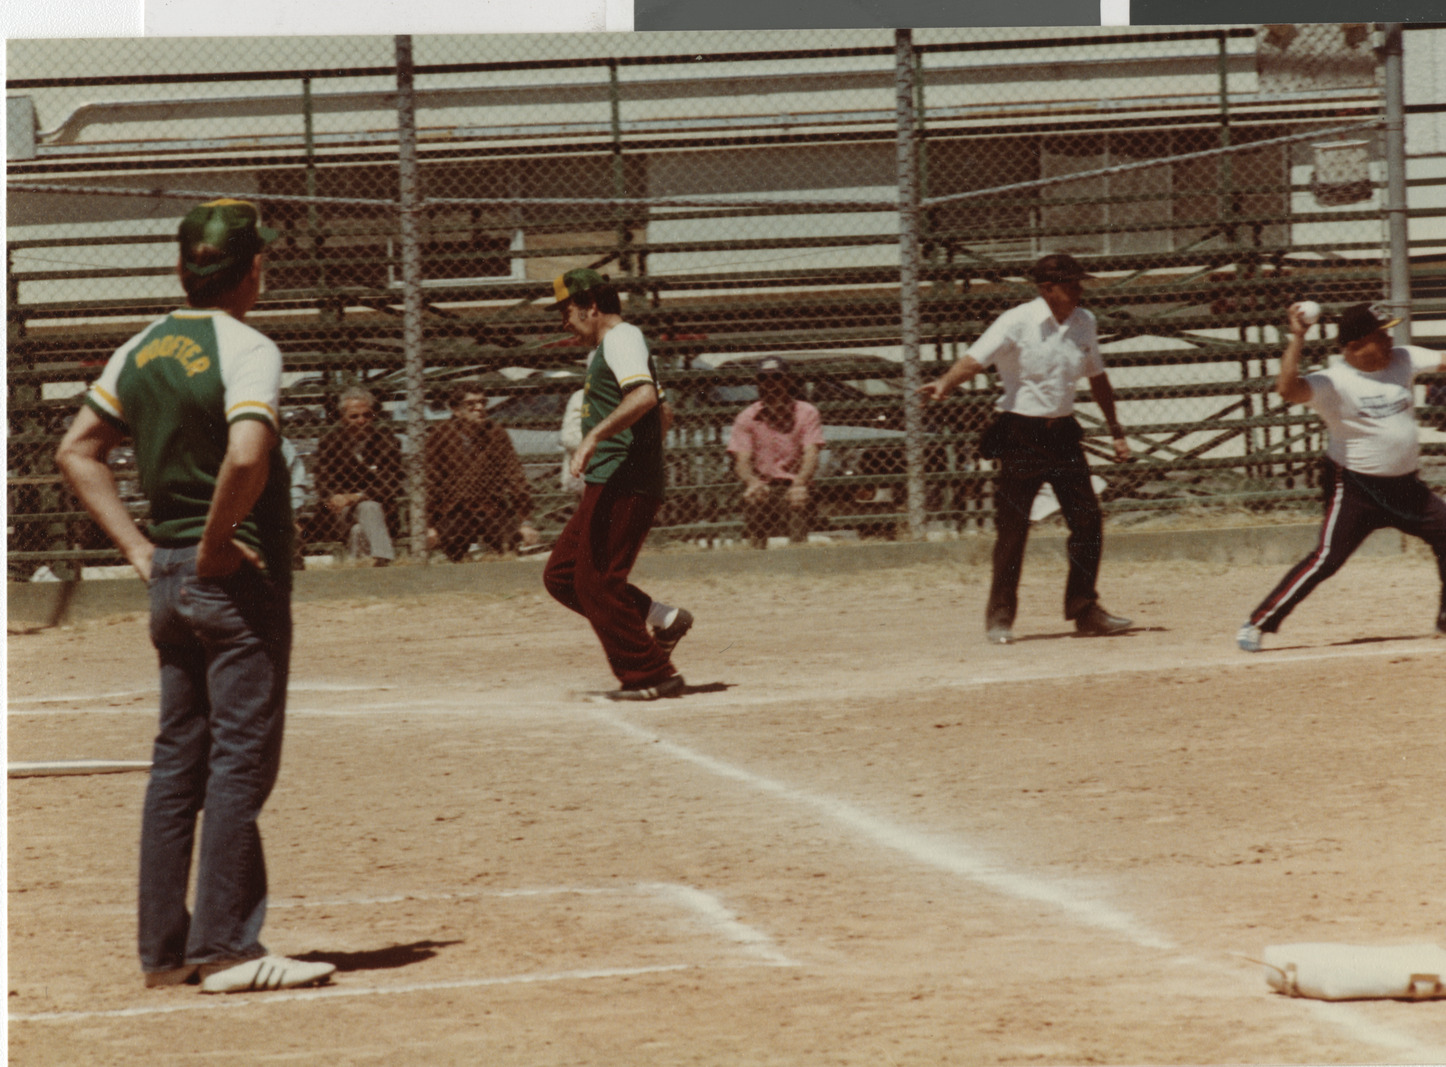 Photograph of a softball game